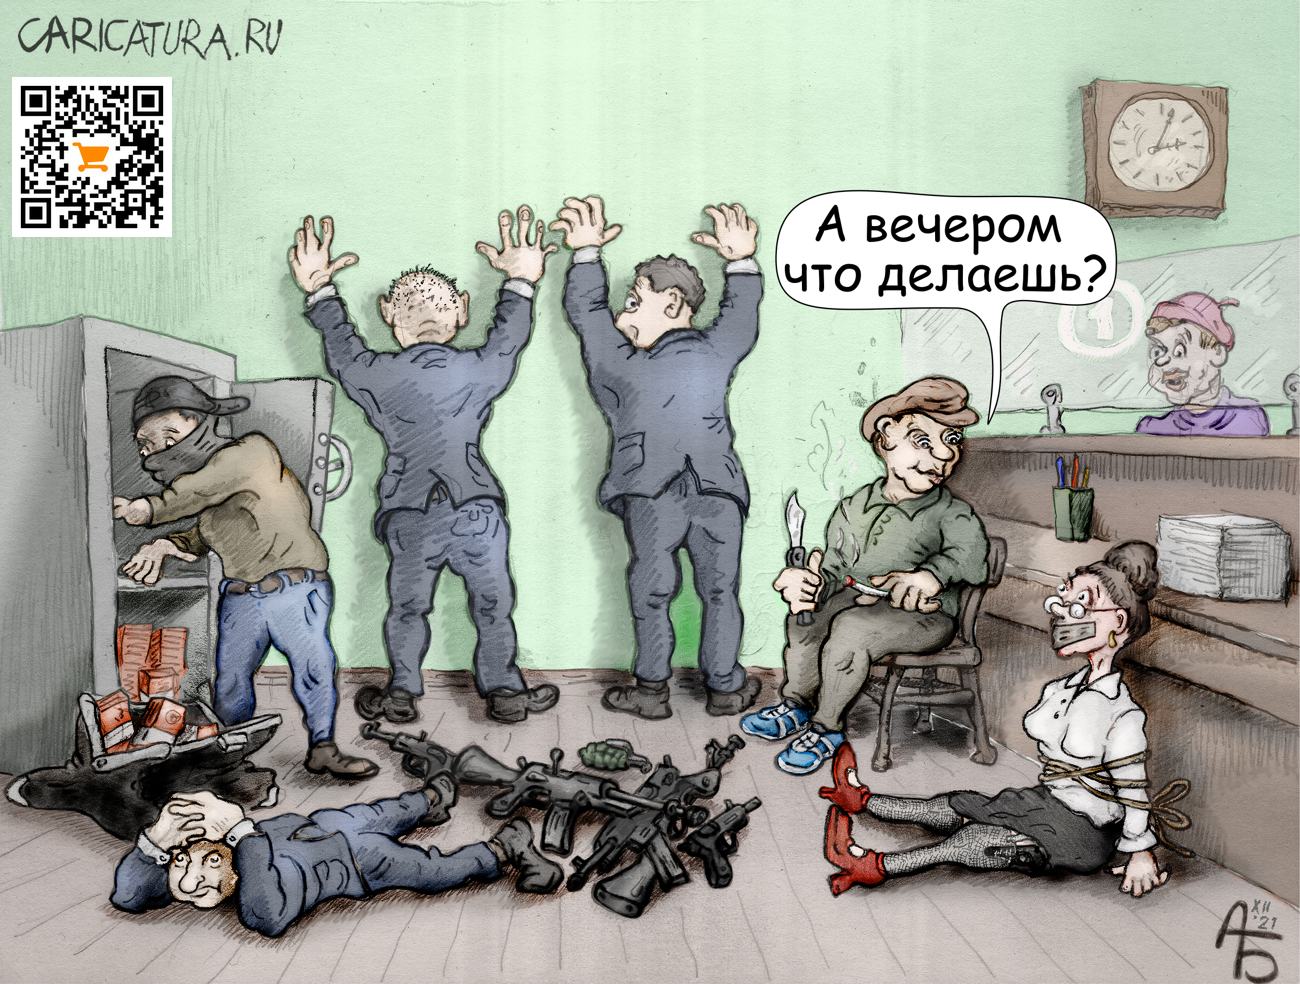 Карикатура "Ограбление", Александр Богданов